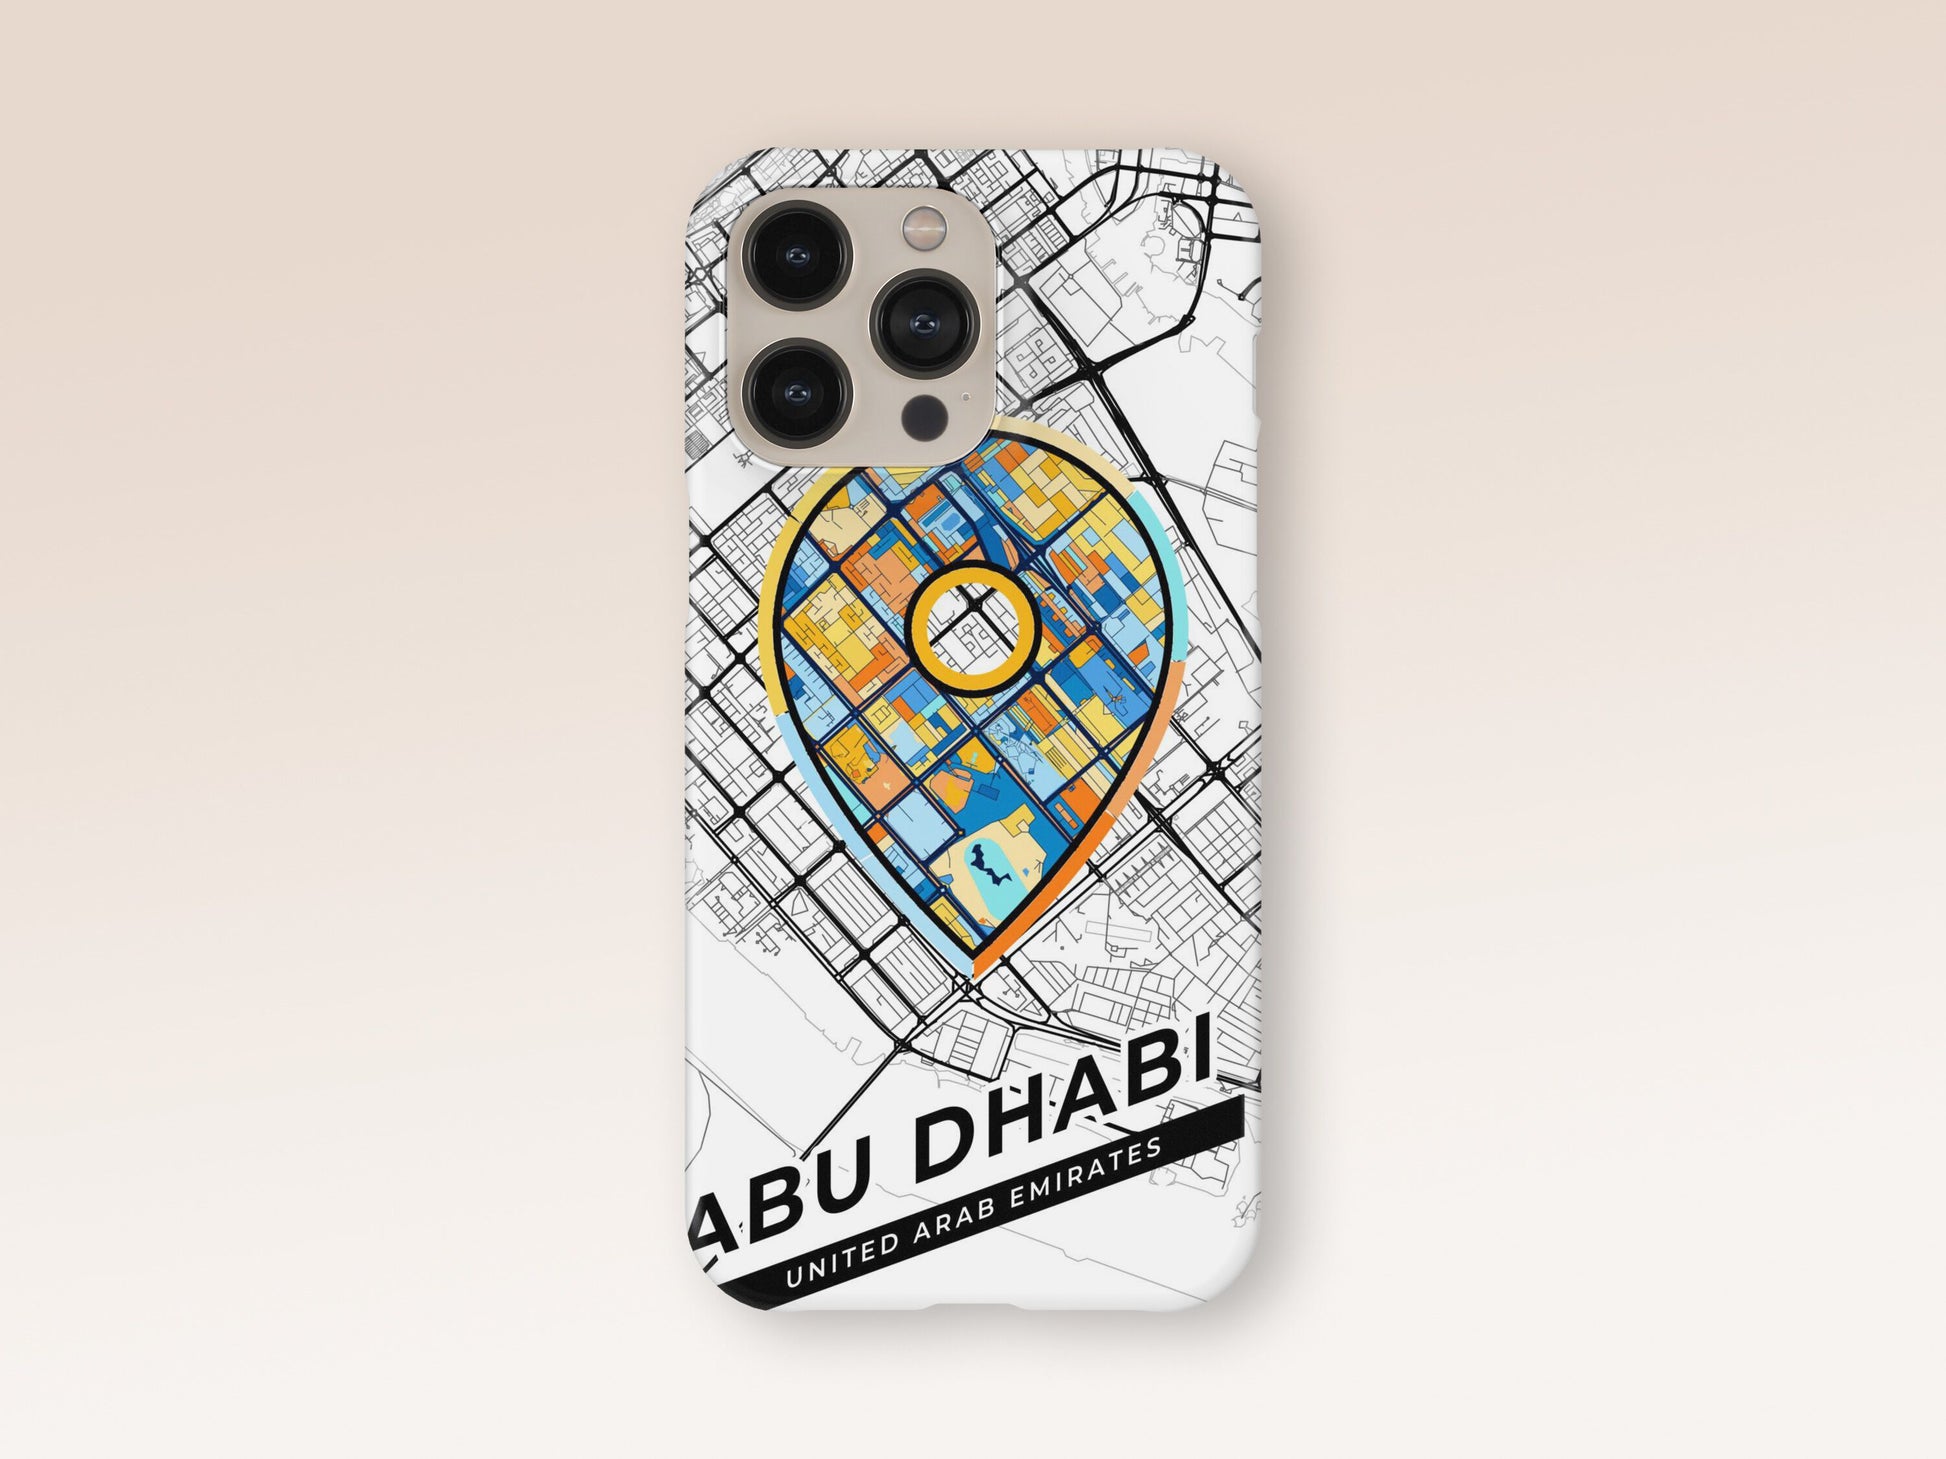 Abu Dhabi United Arab Emirates slim phone case with colorful icon. Birthday, wedding or housewarming gift. Couple match cases. 1